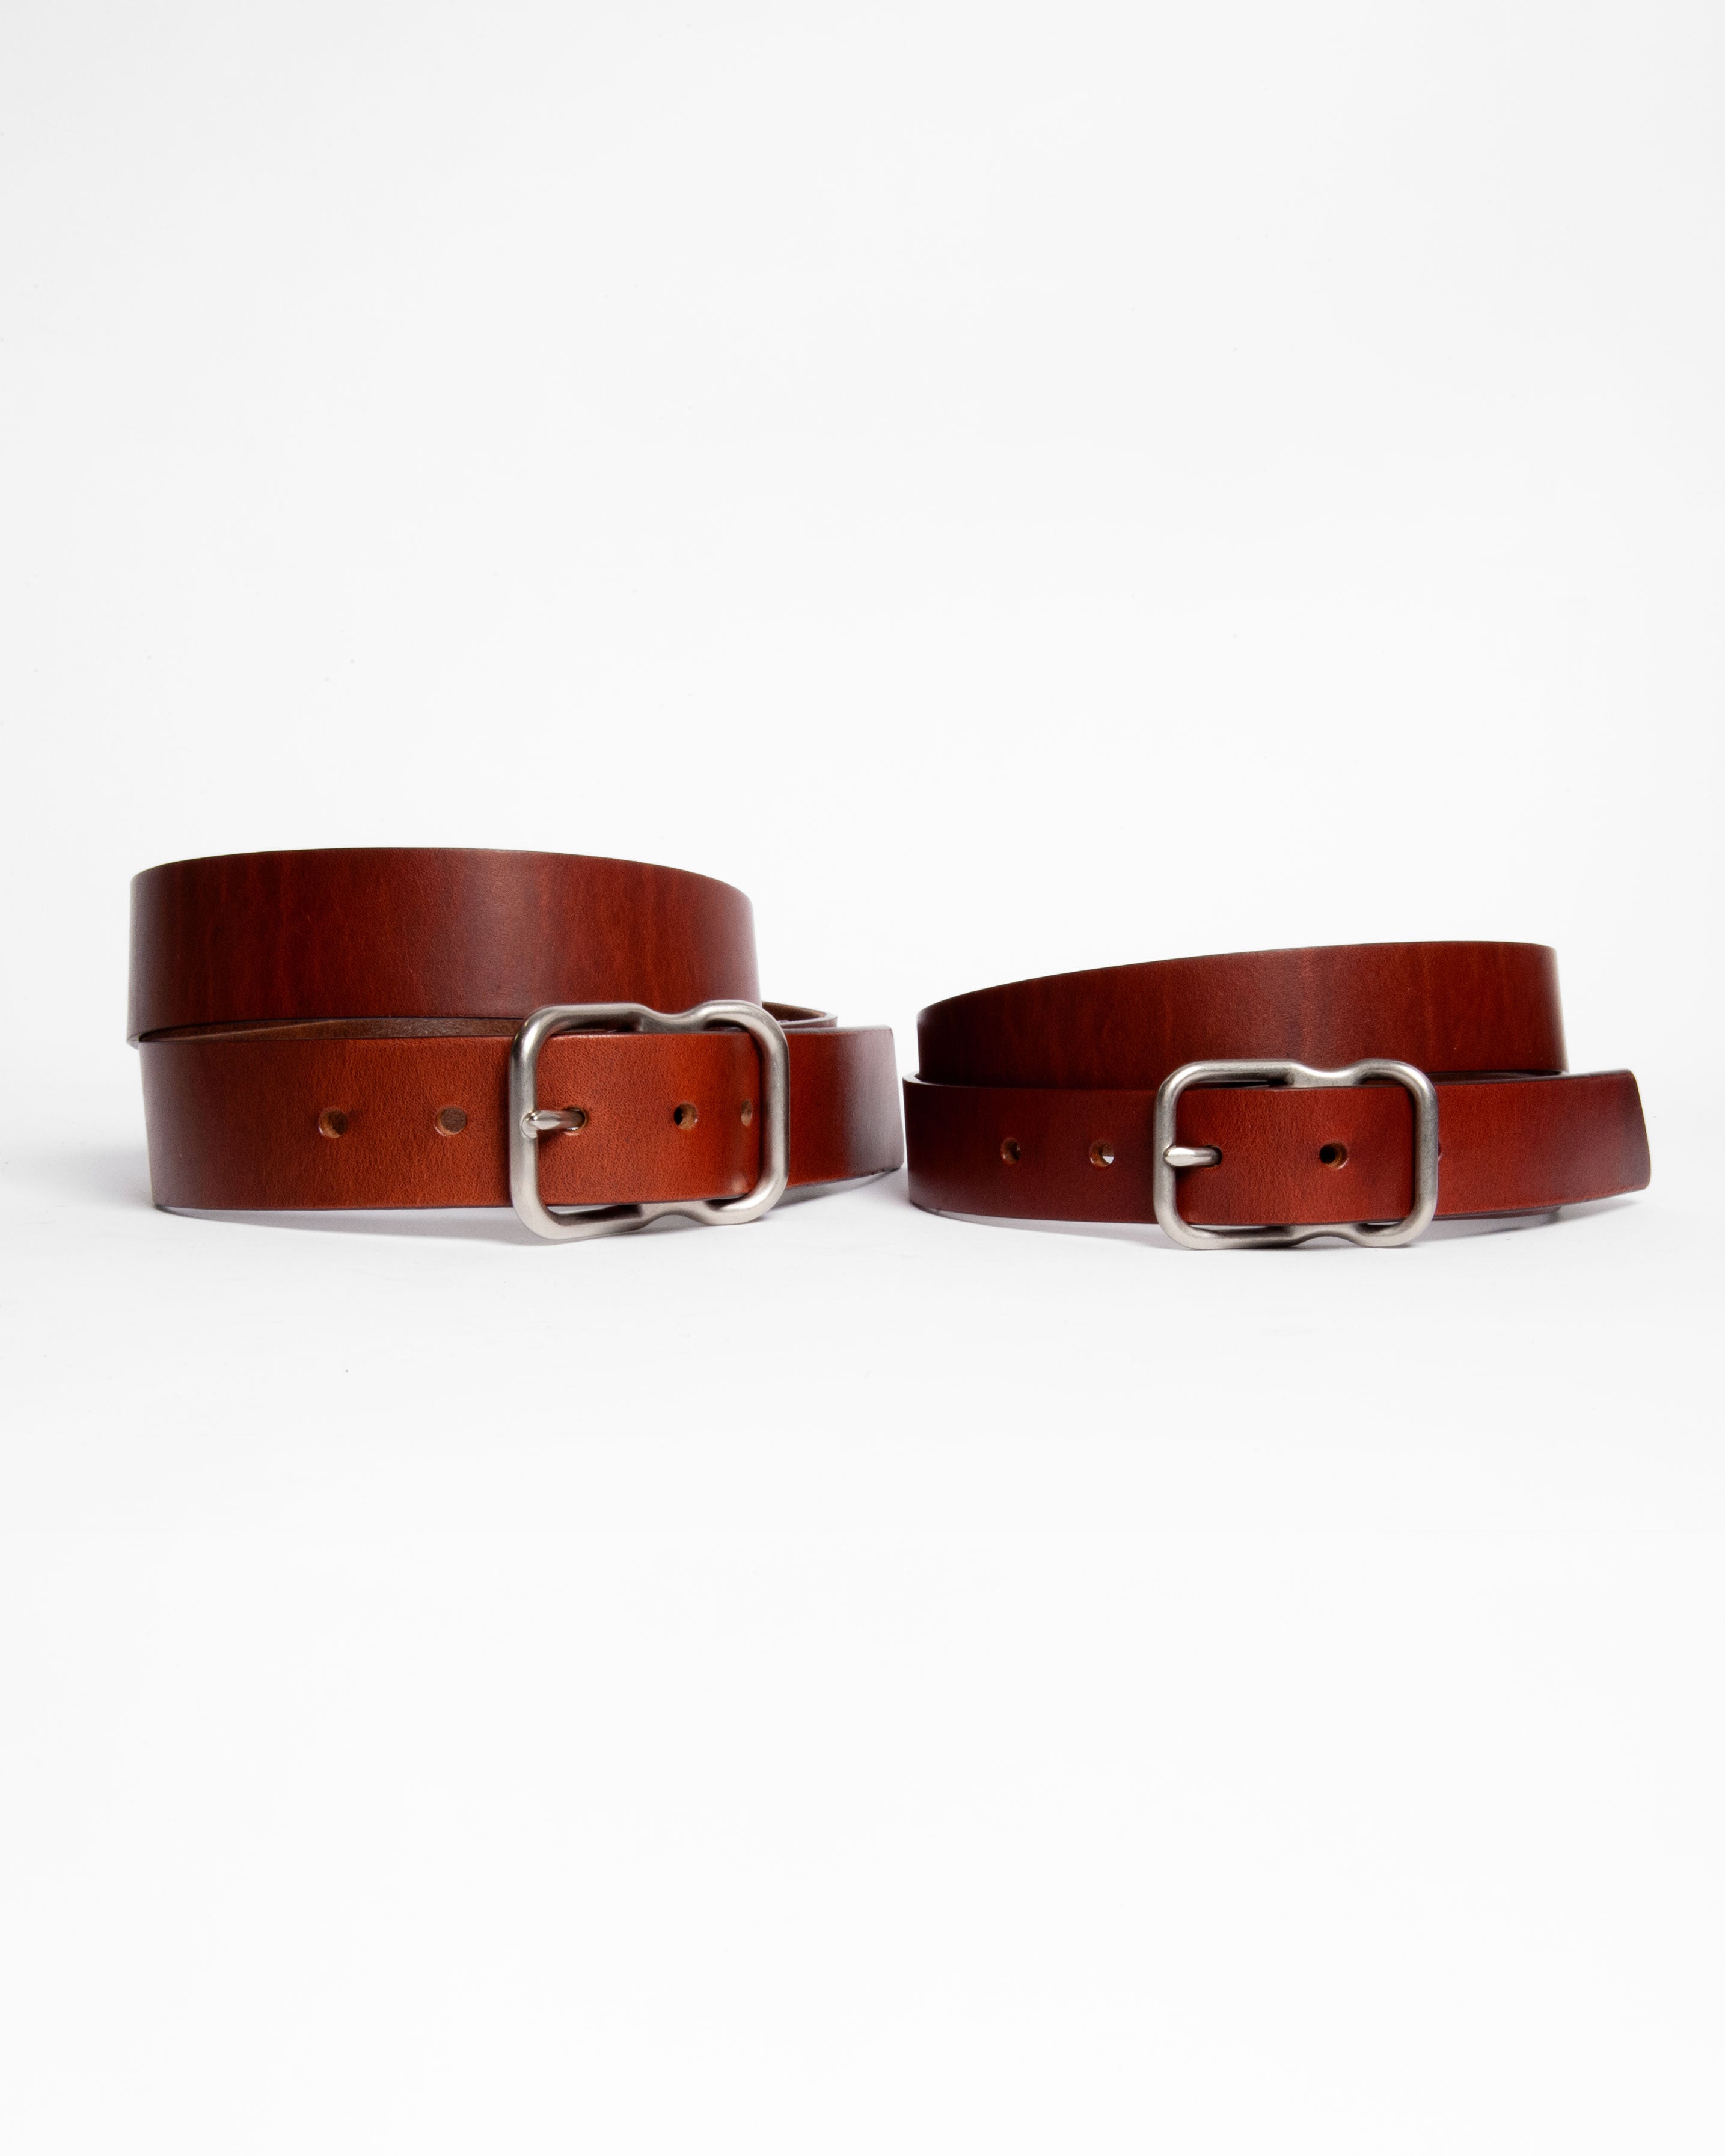 118 Signature Leather Belt - Narrow - Chestnut - Nickel